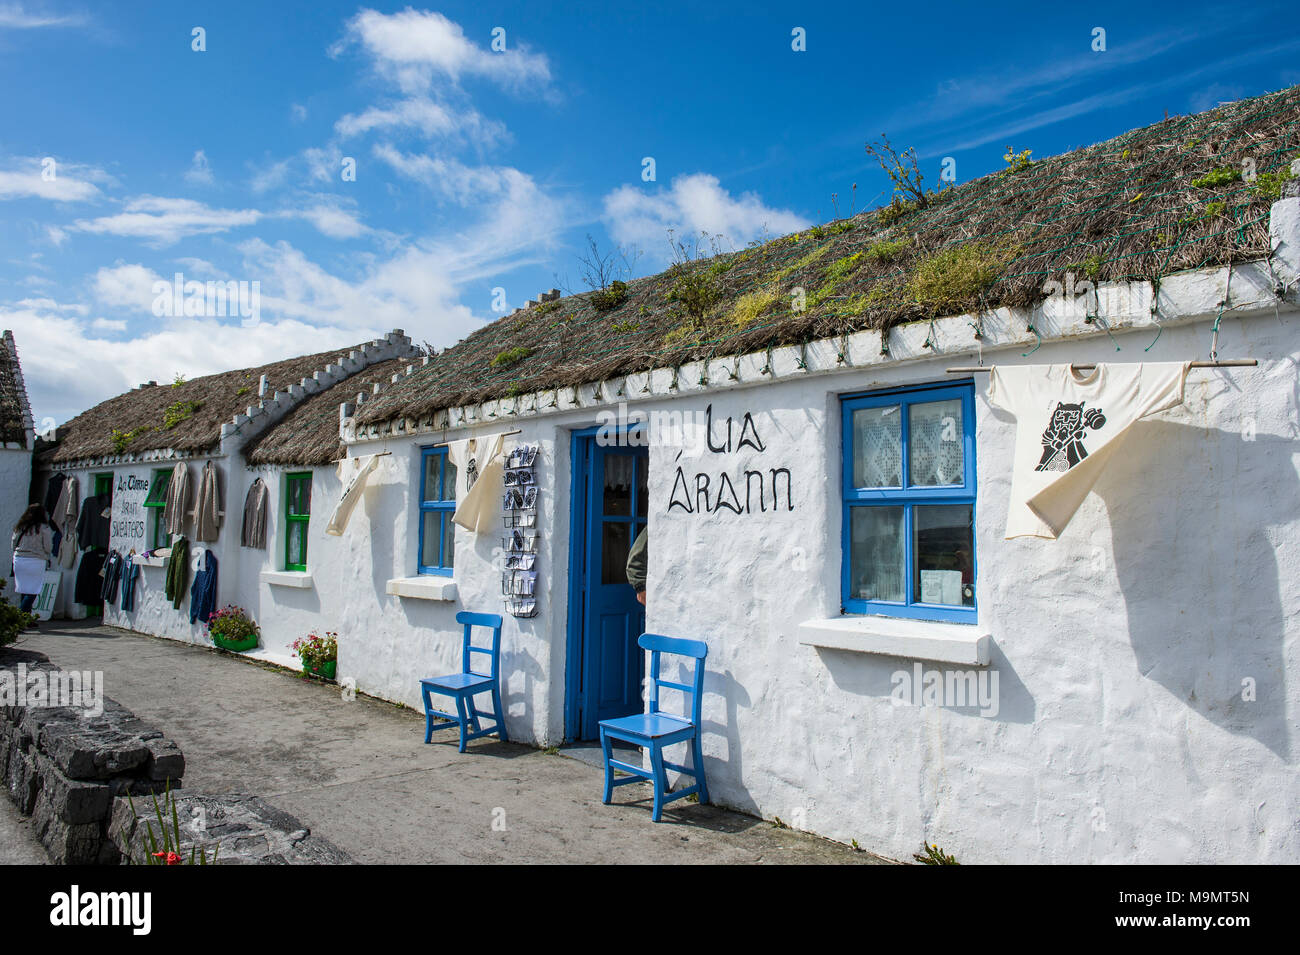 Pub local dans Arainn, les îles d'Aran, Irlande Banque D'Images